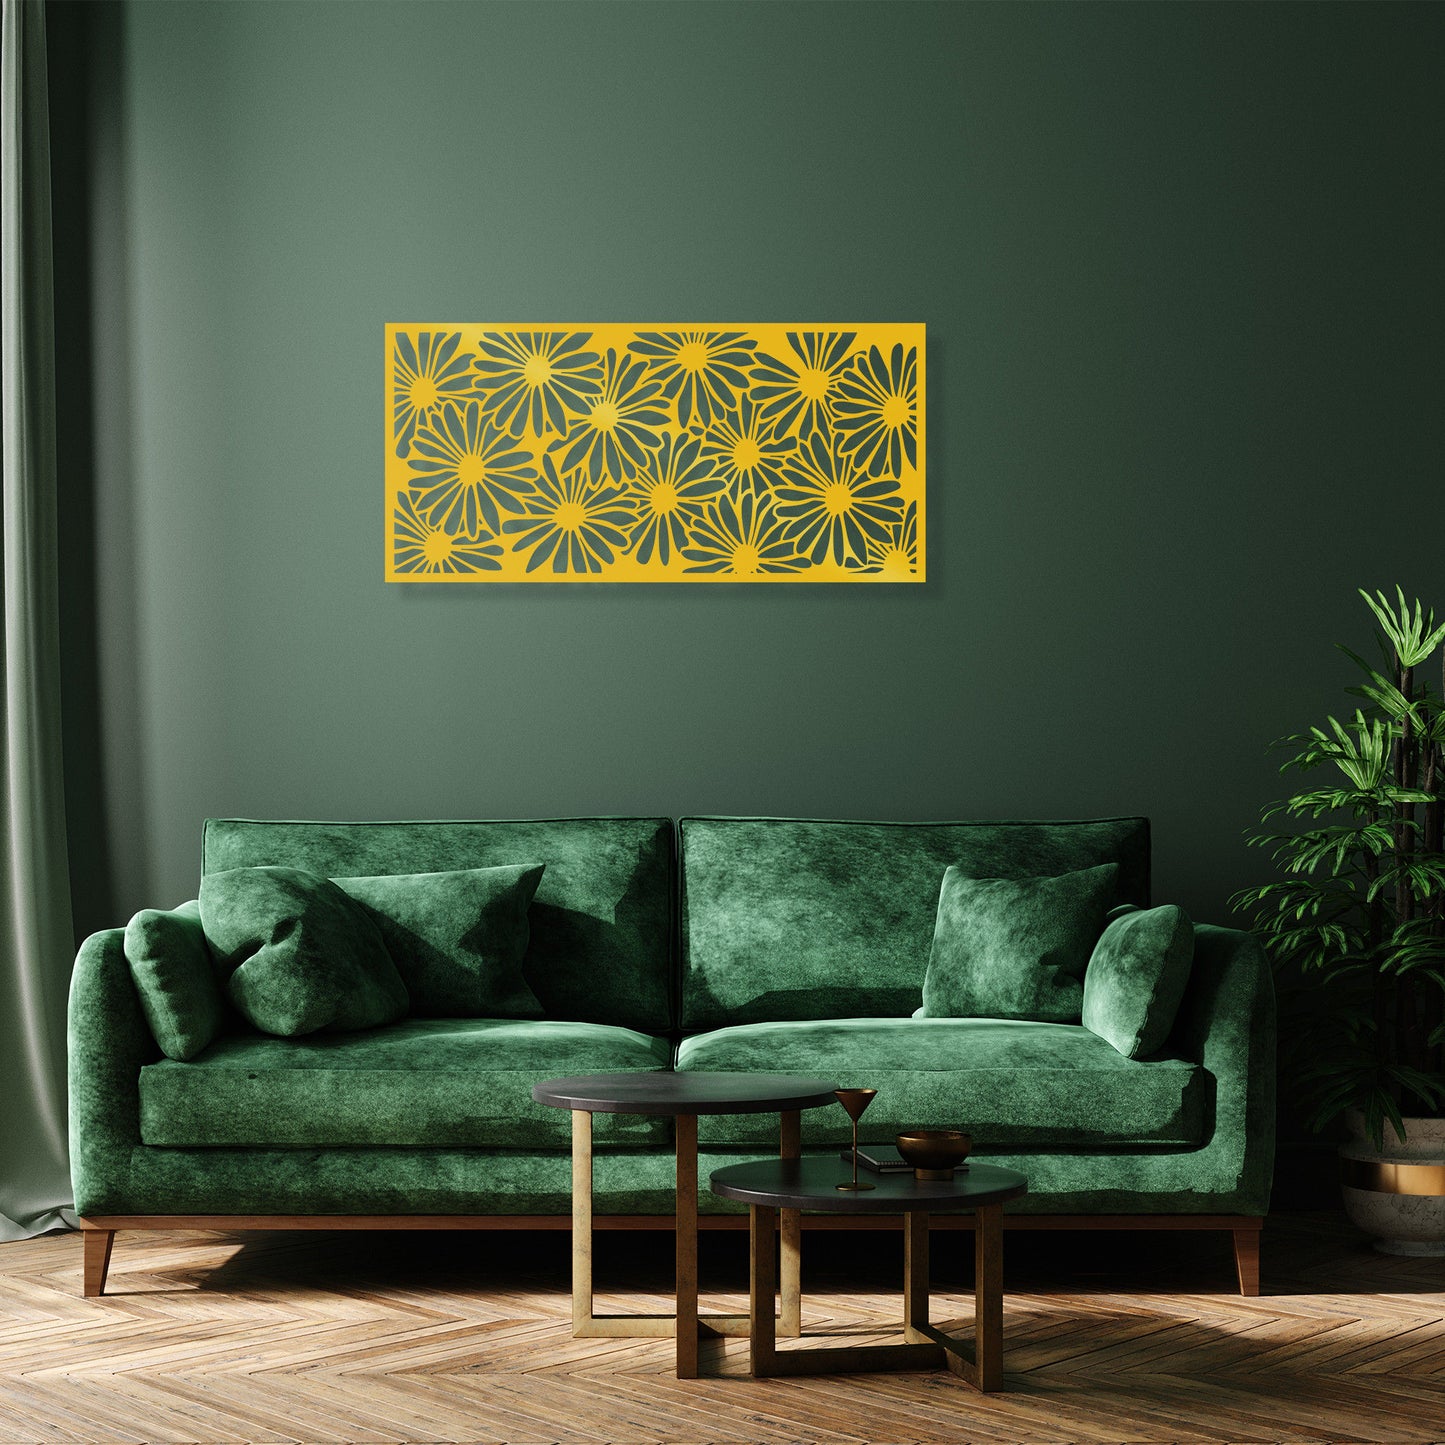 Decorative Panel 3 - Gold - Decorative Metal Wall Accessory